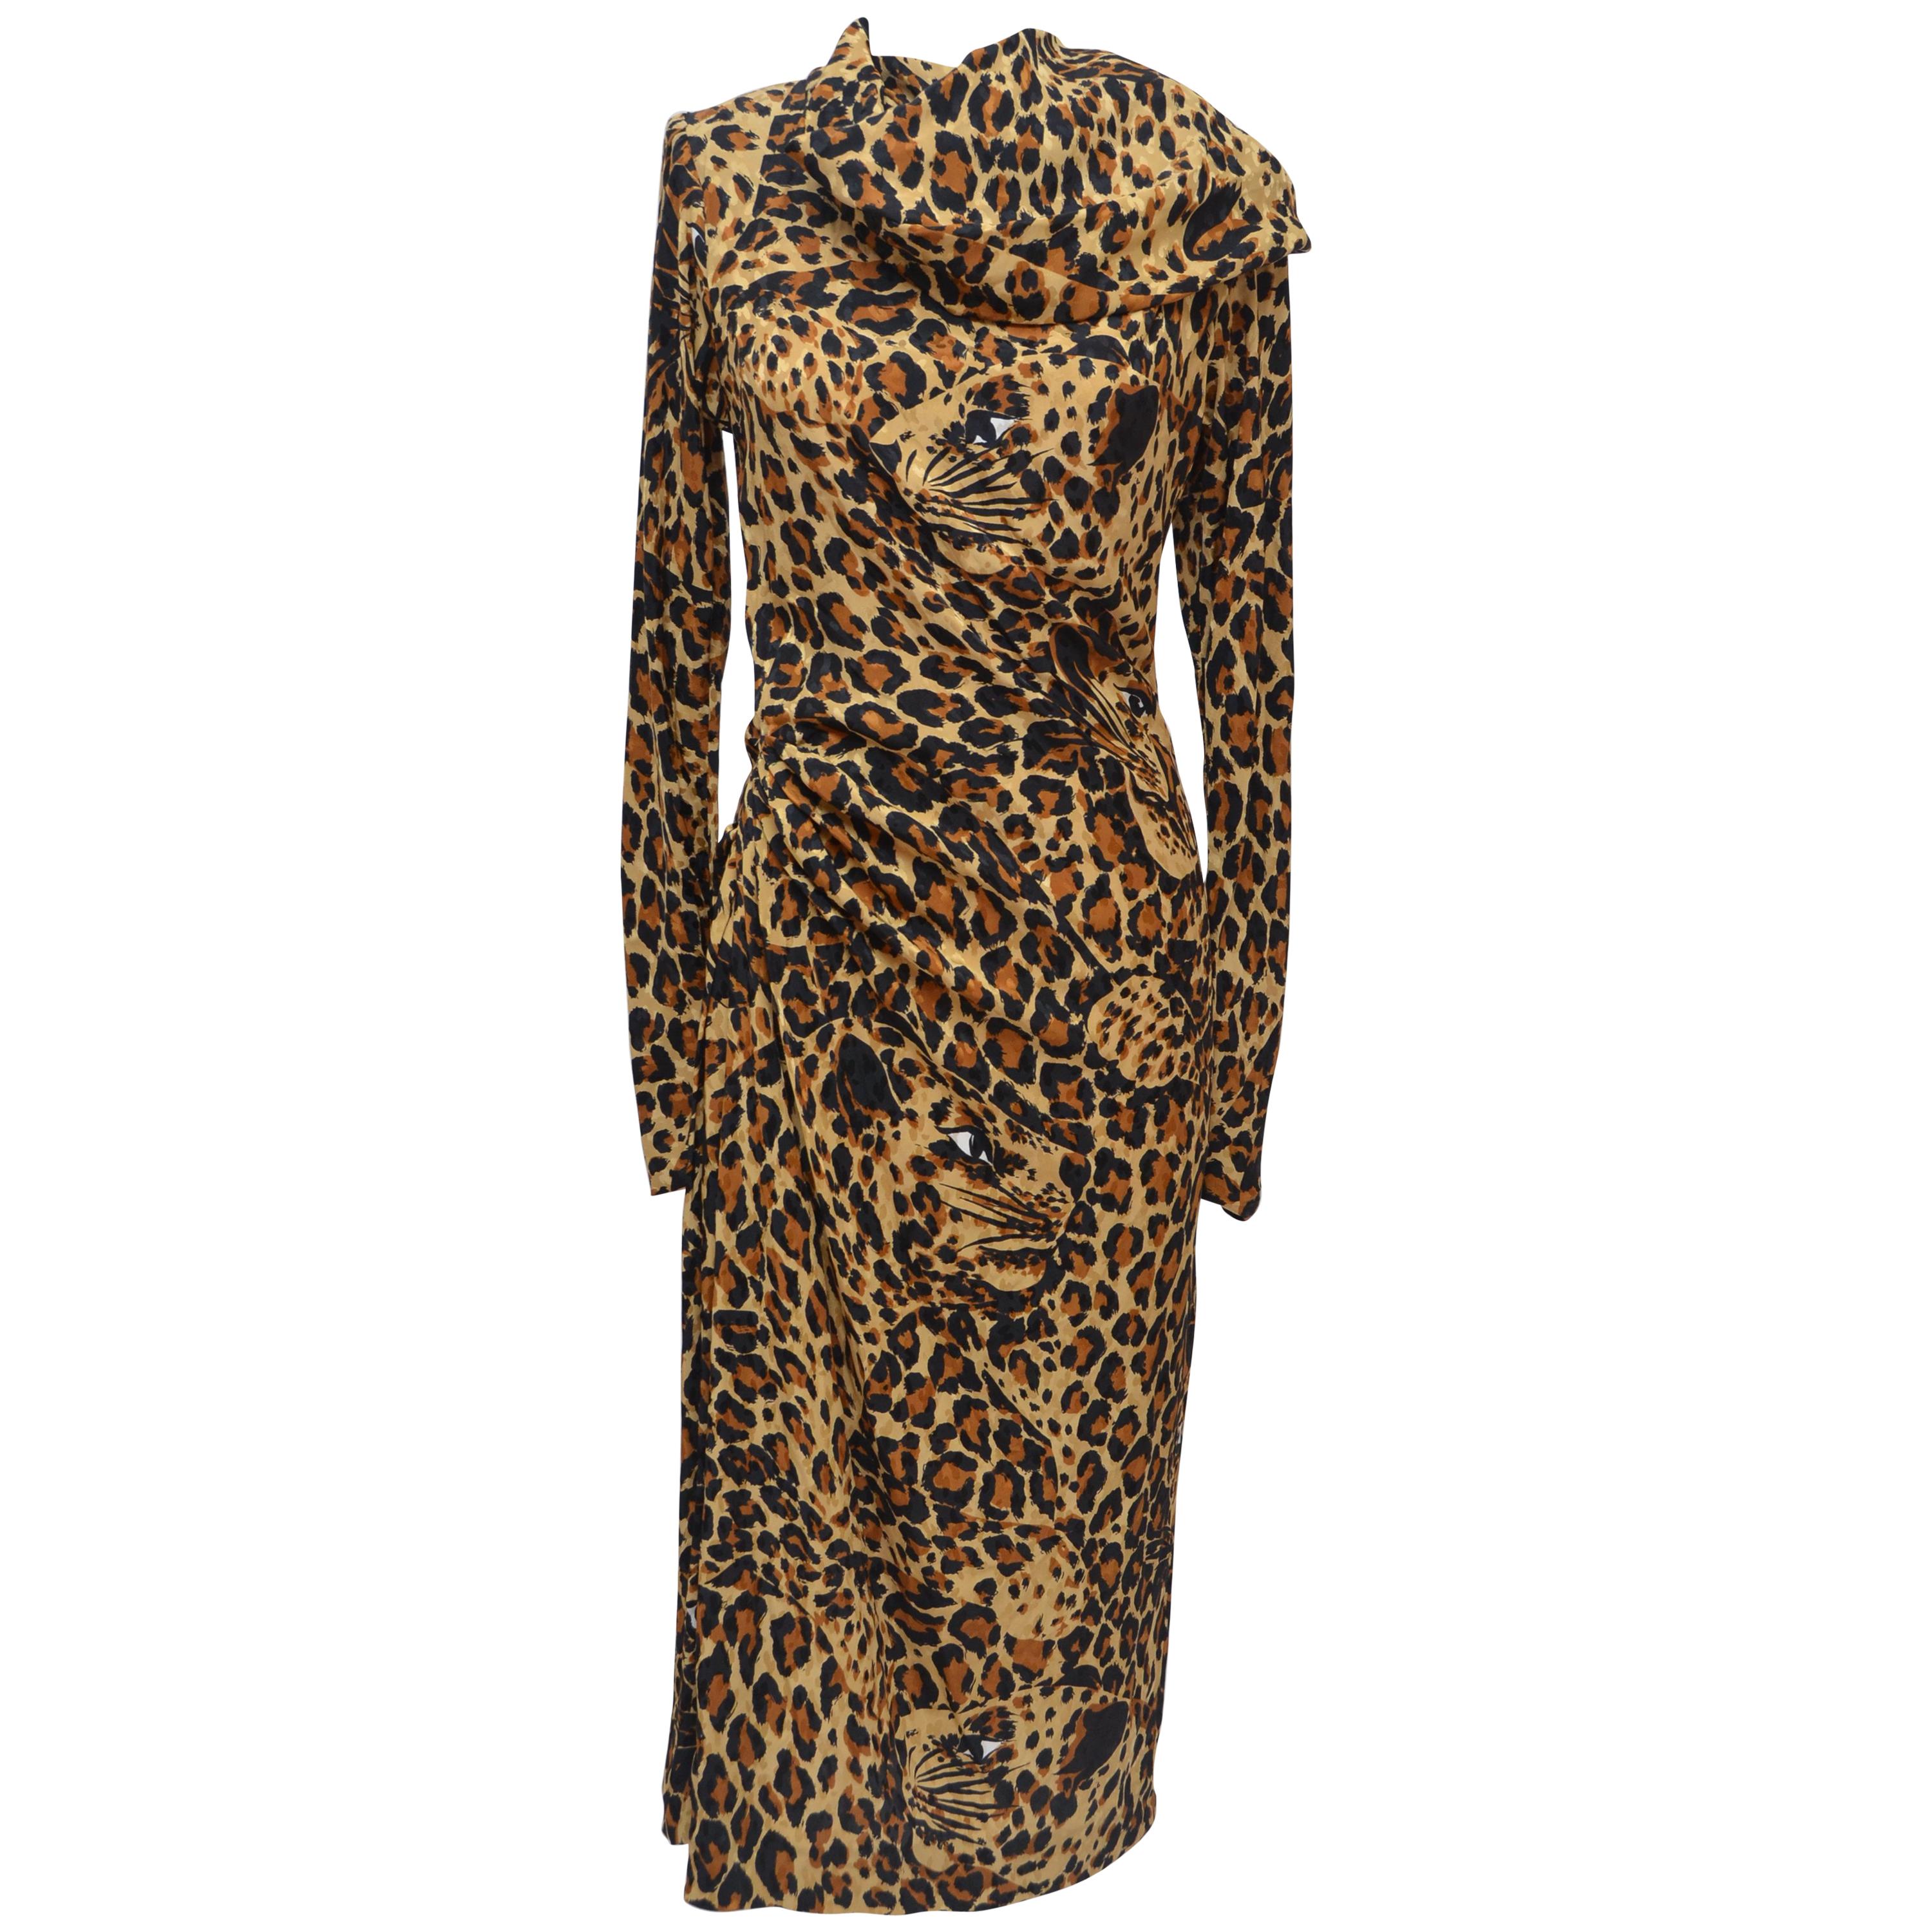 Yves Saint Laurent Rive Gauche Cheetah Silk Dress, 1980s NEW With Tags